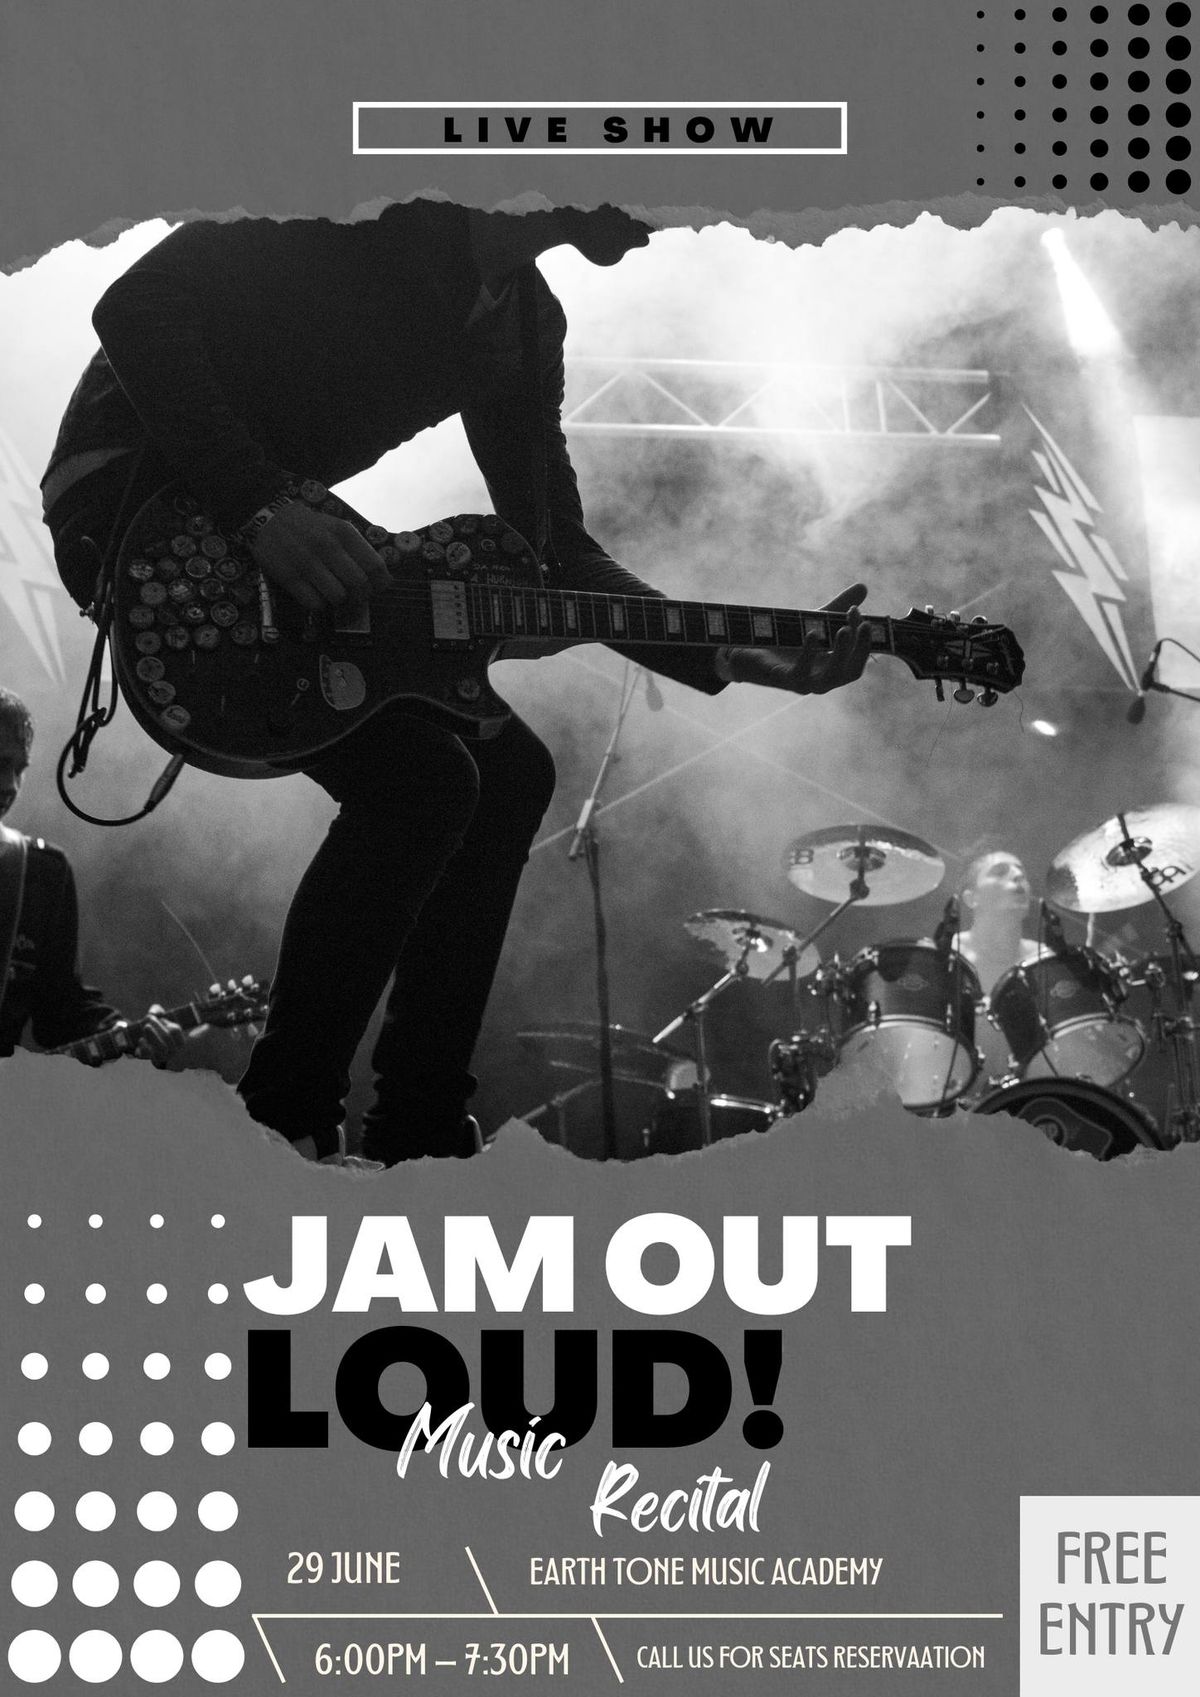 Jam Out Loud! Music Recital by T.Jason & T.Walter